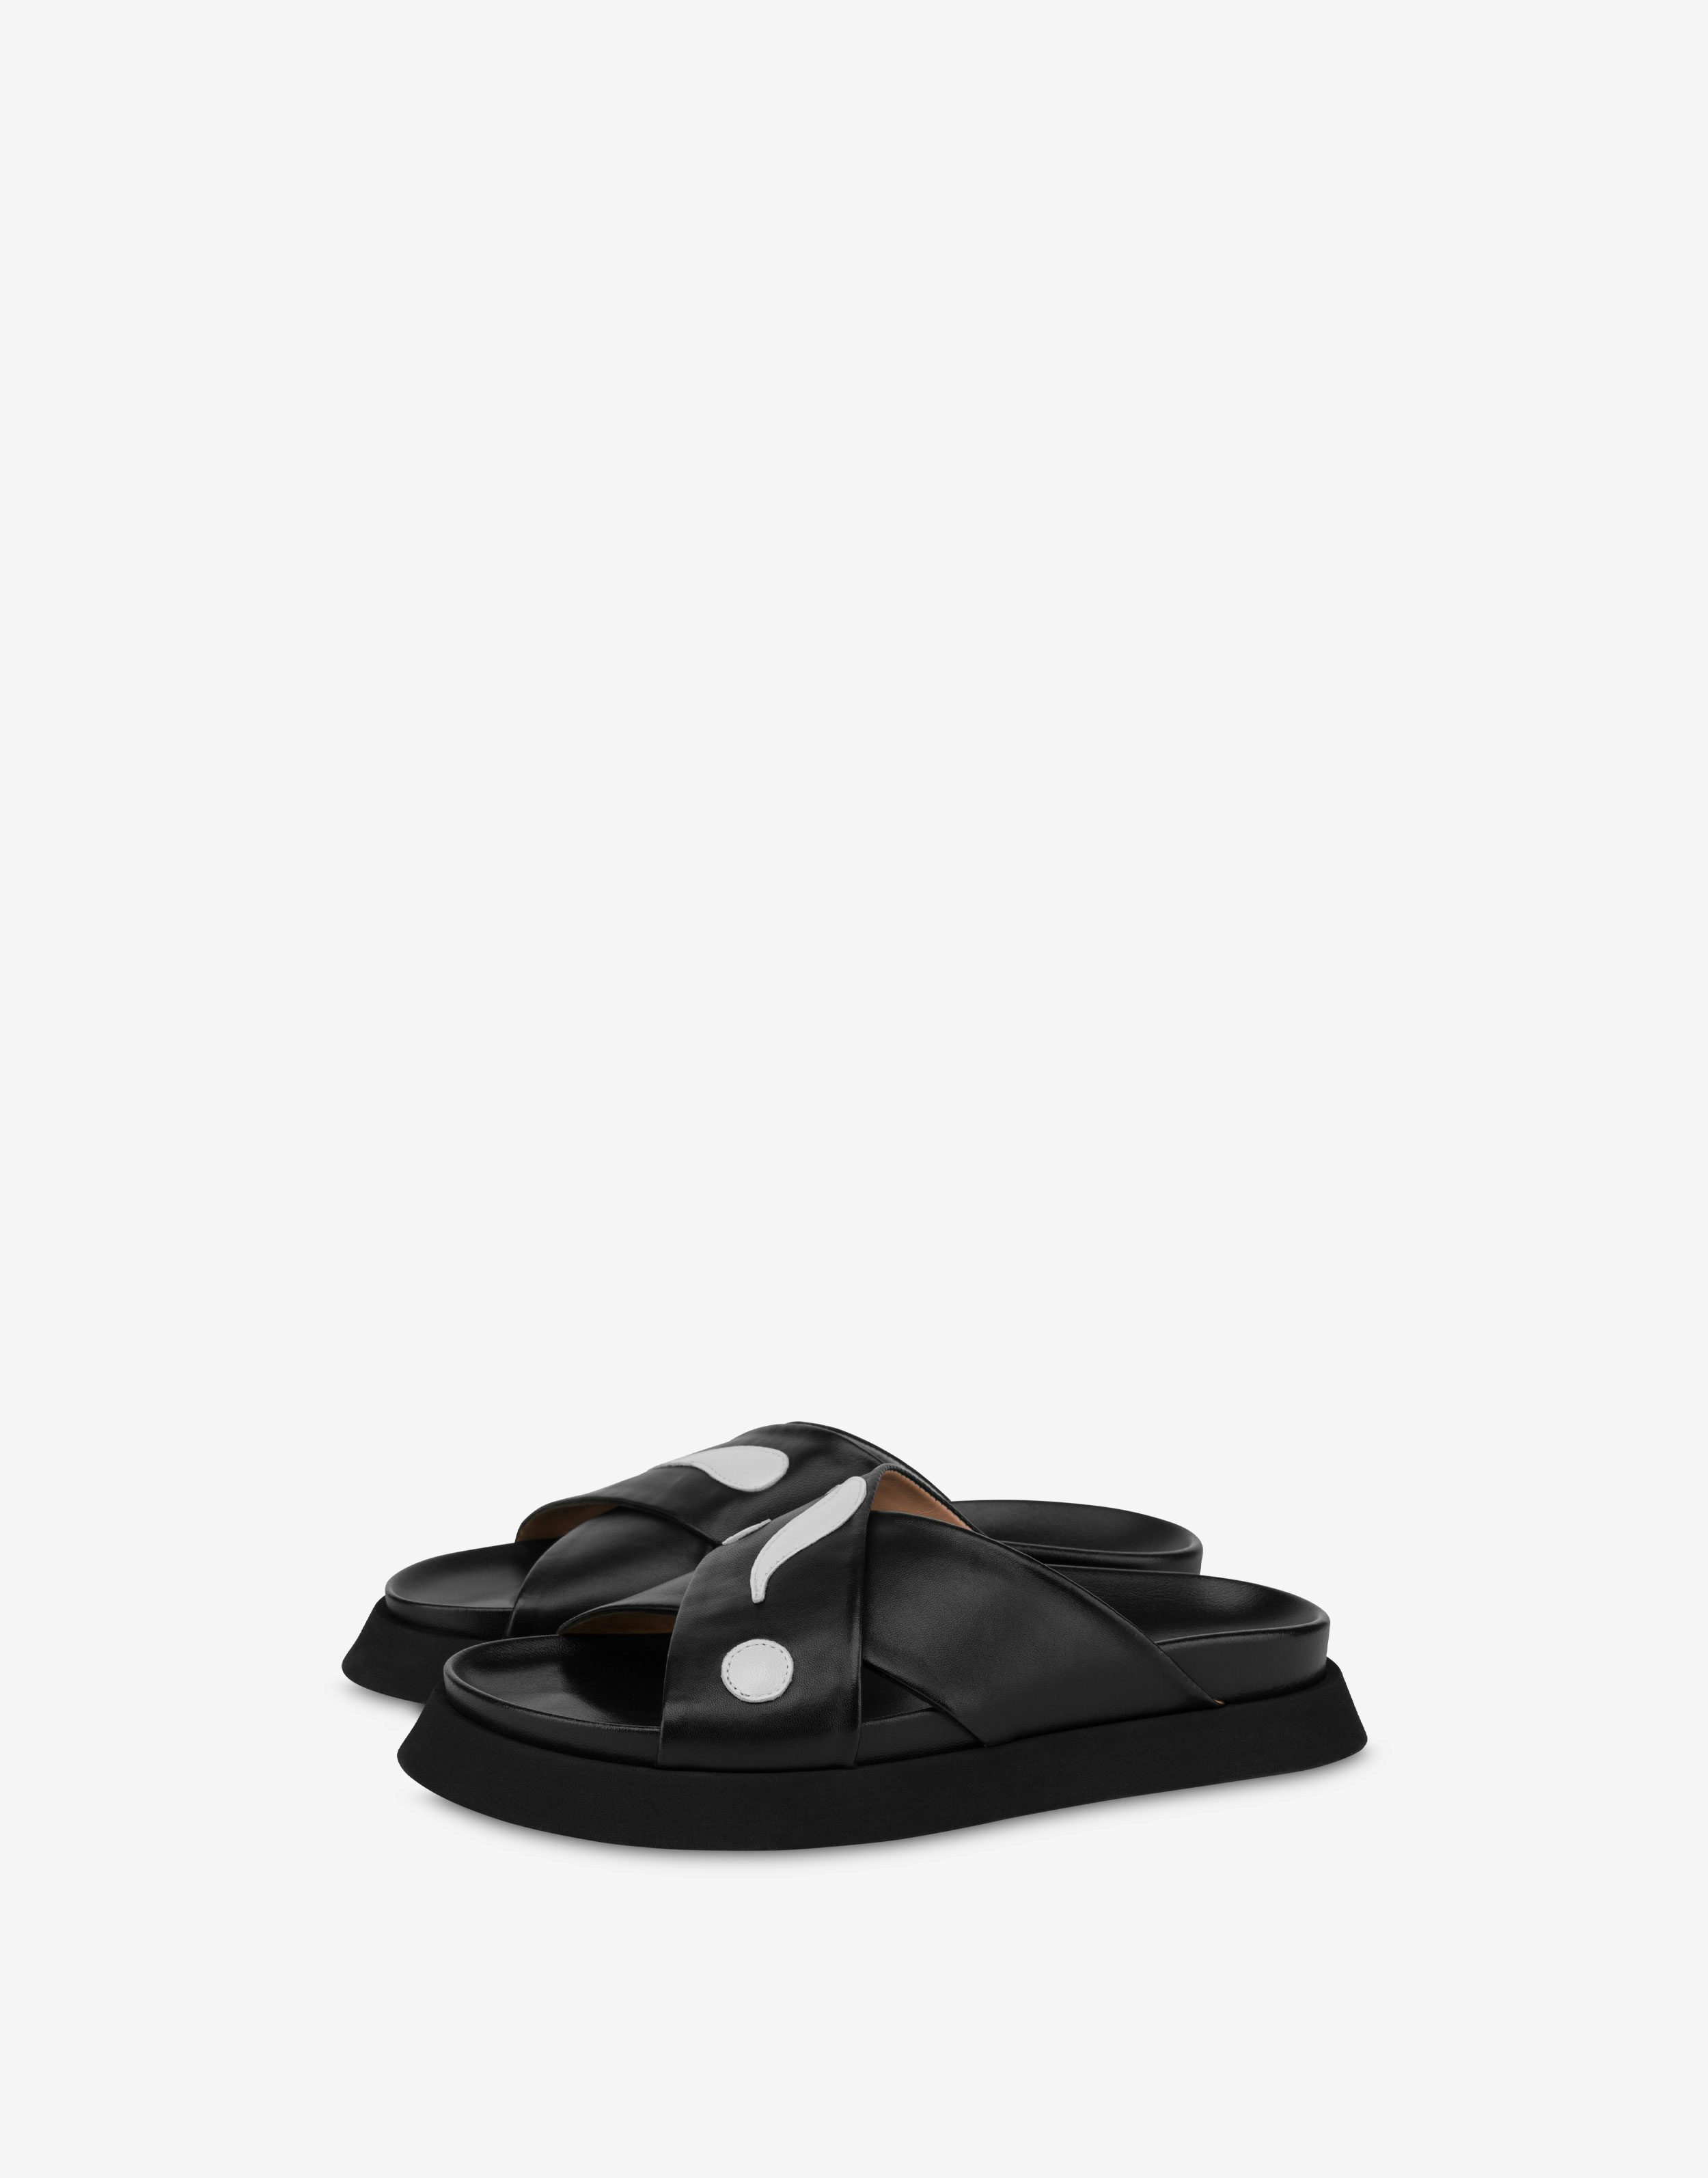 Moschino Symbols nappa leather flatform sandals